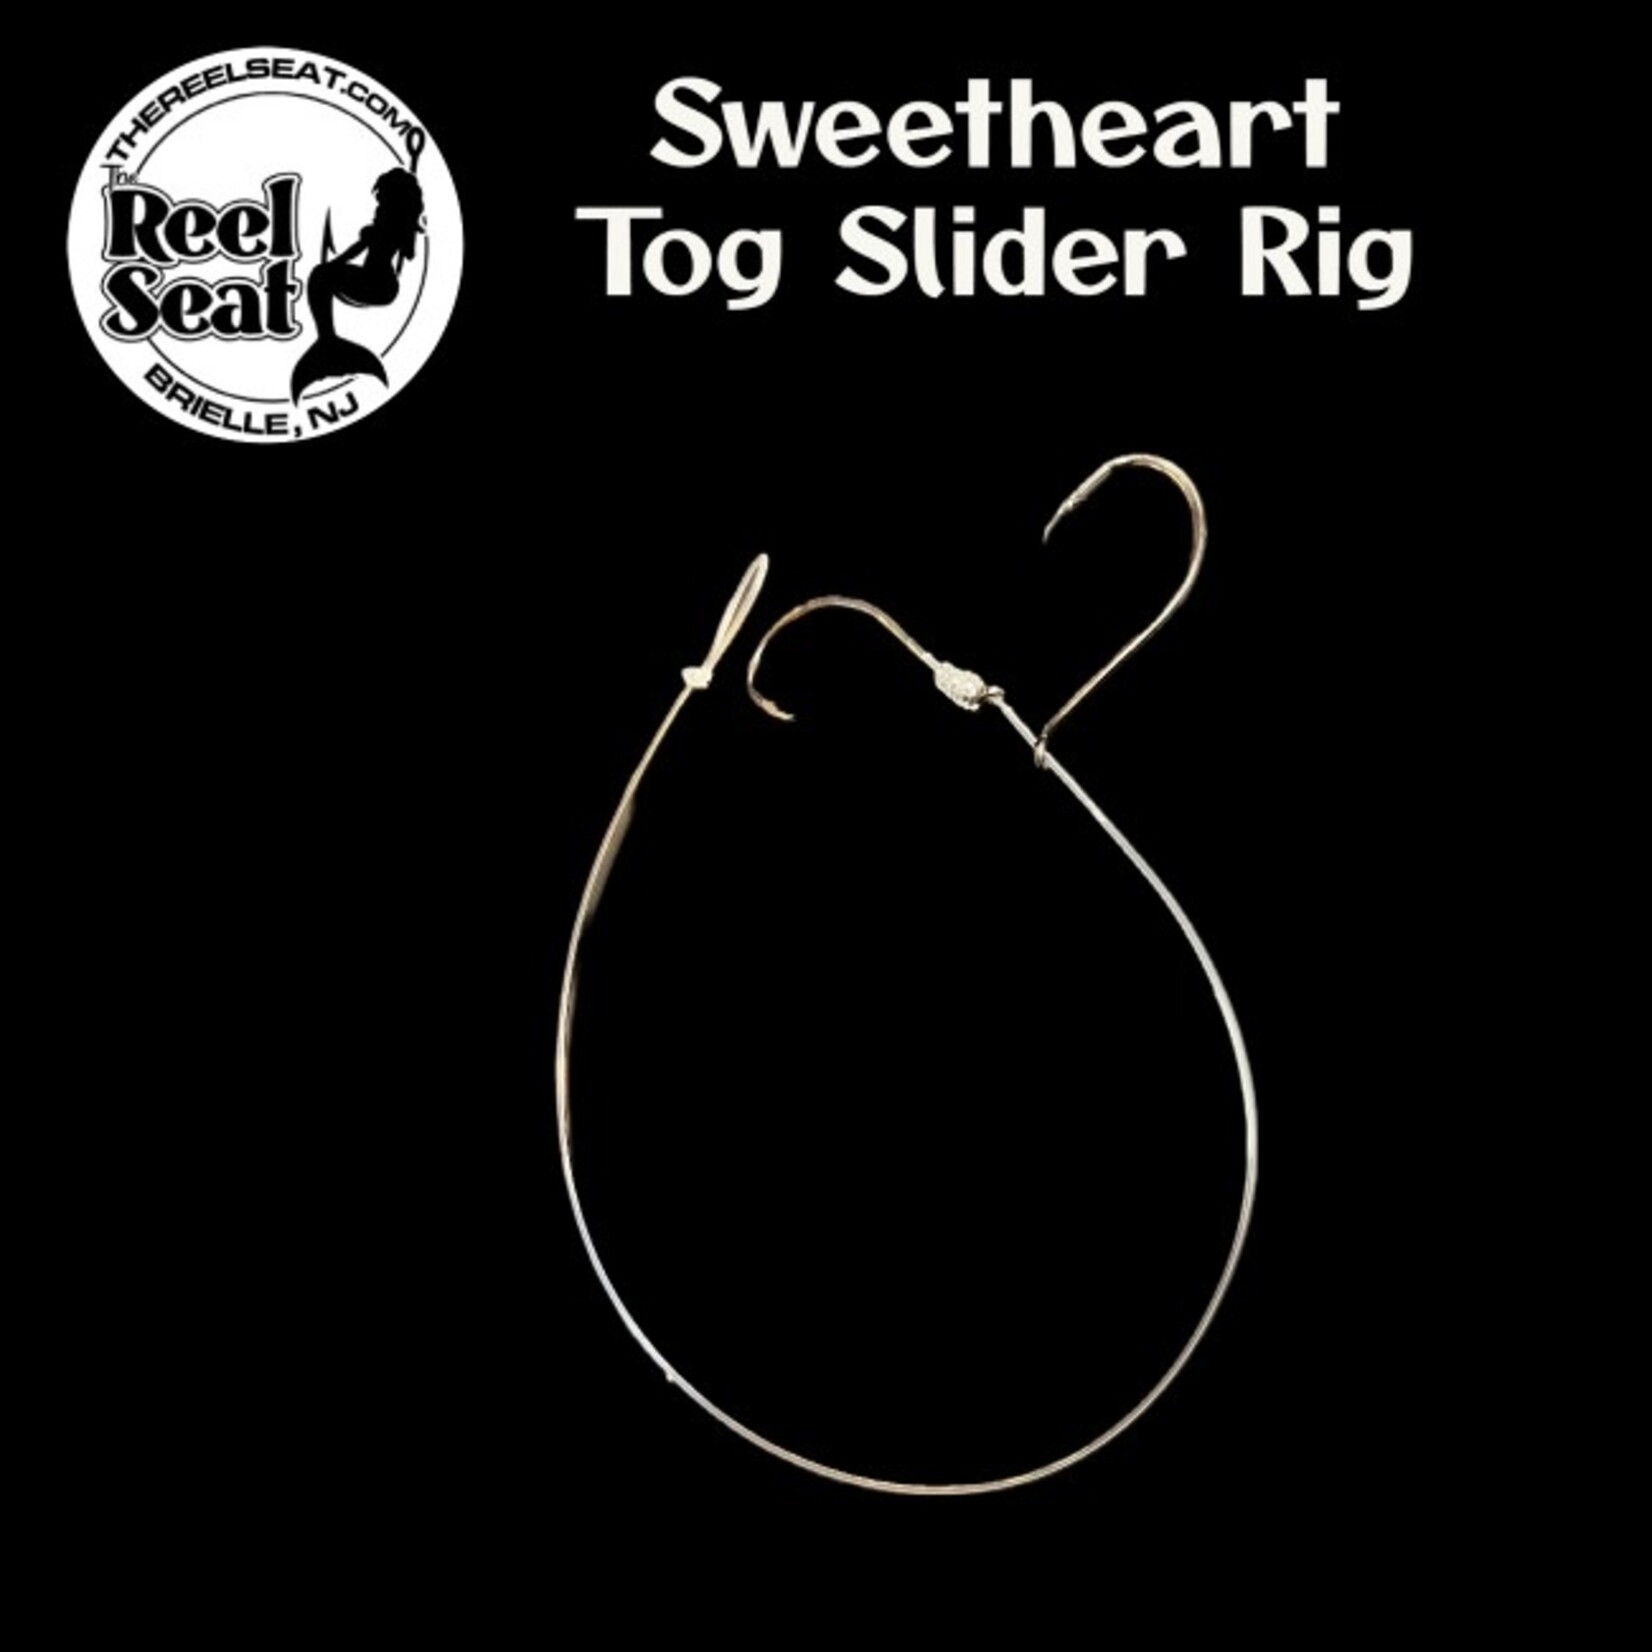 The Reel Seat RS Sweetheart Tog Slider Rig